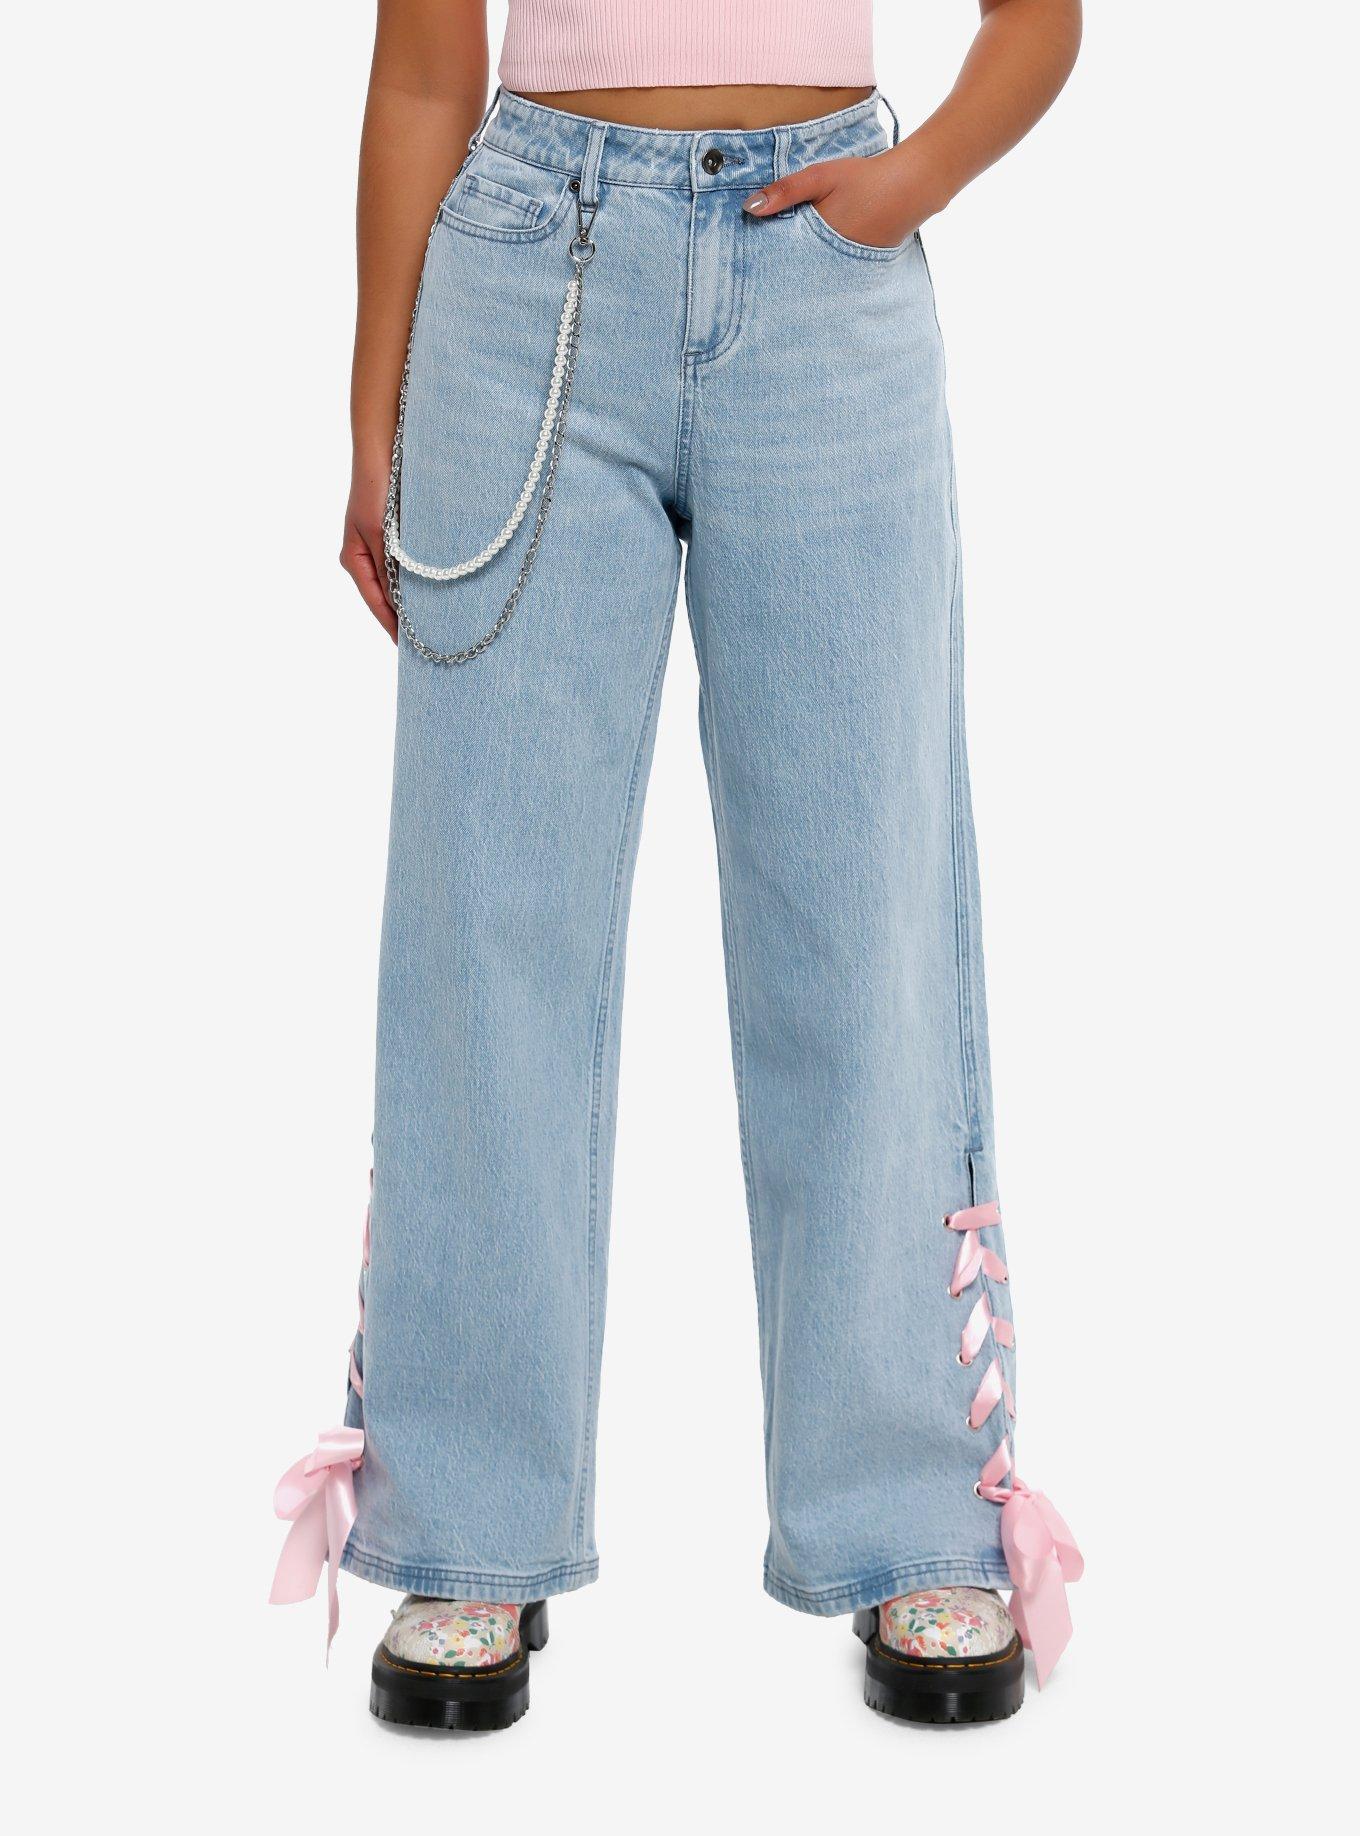 Denim Zone Hot Pink Super Stretchy Wide Leg Jeans